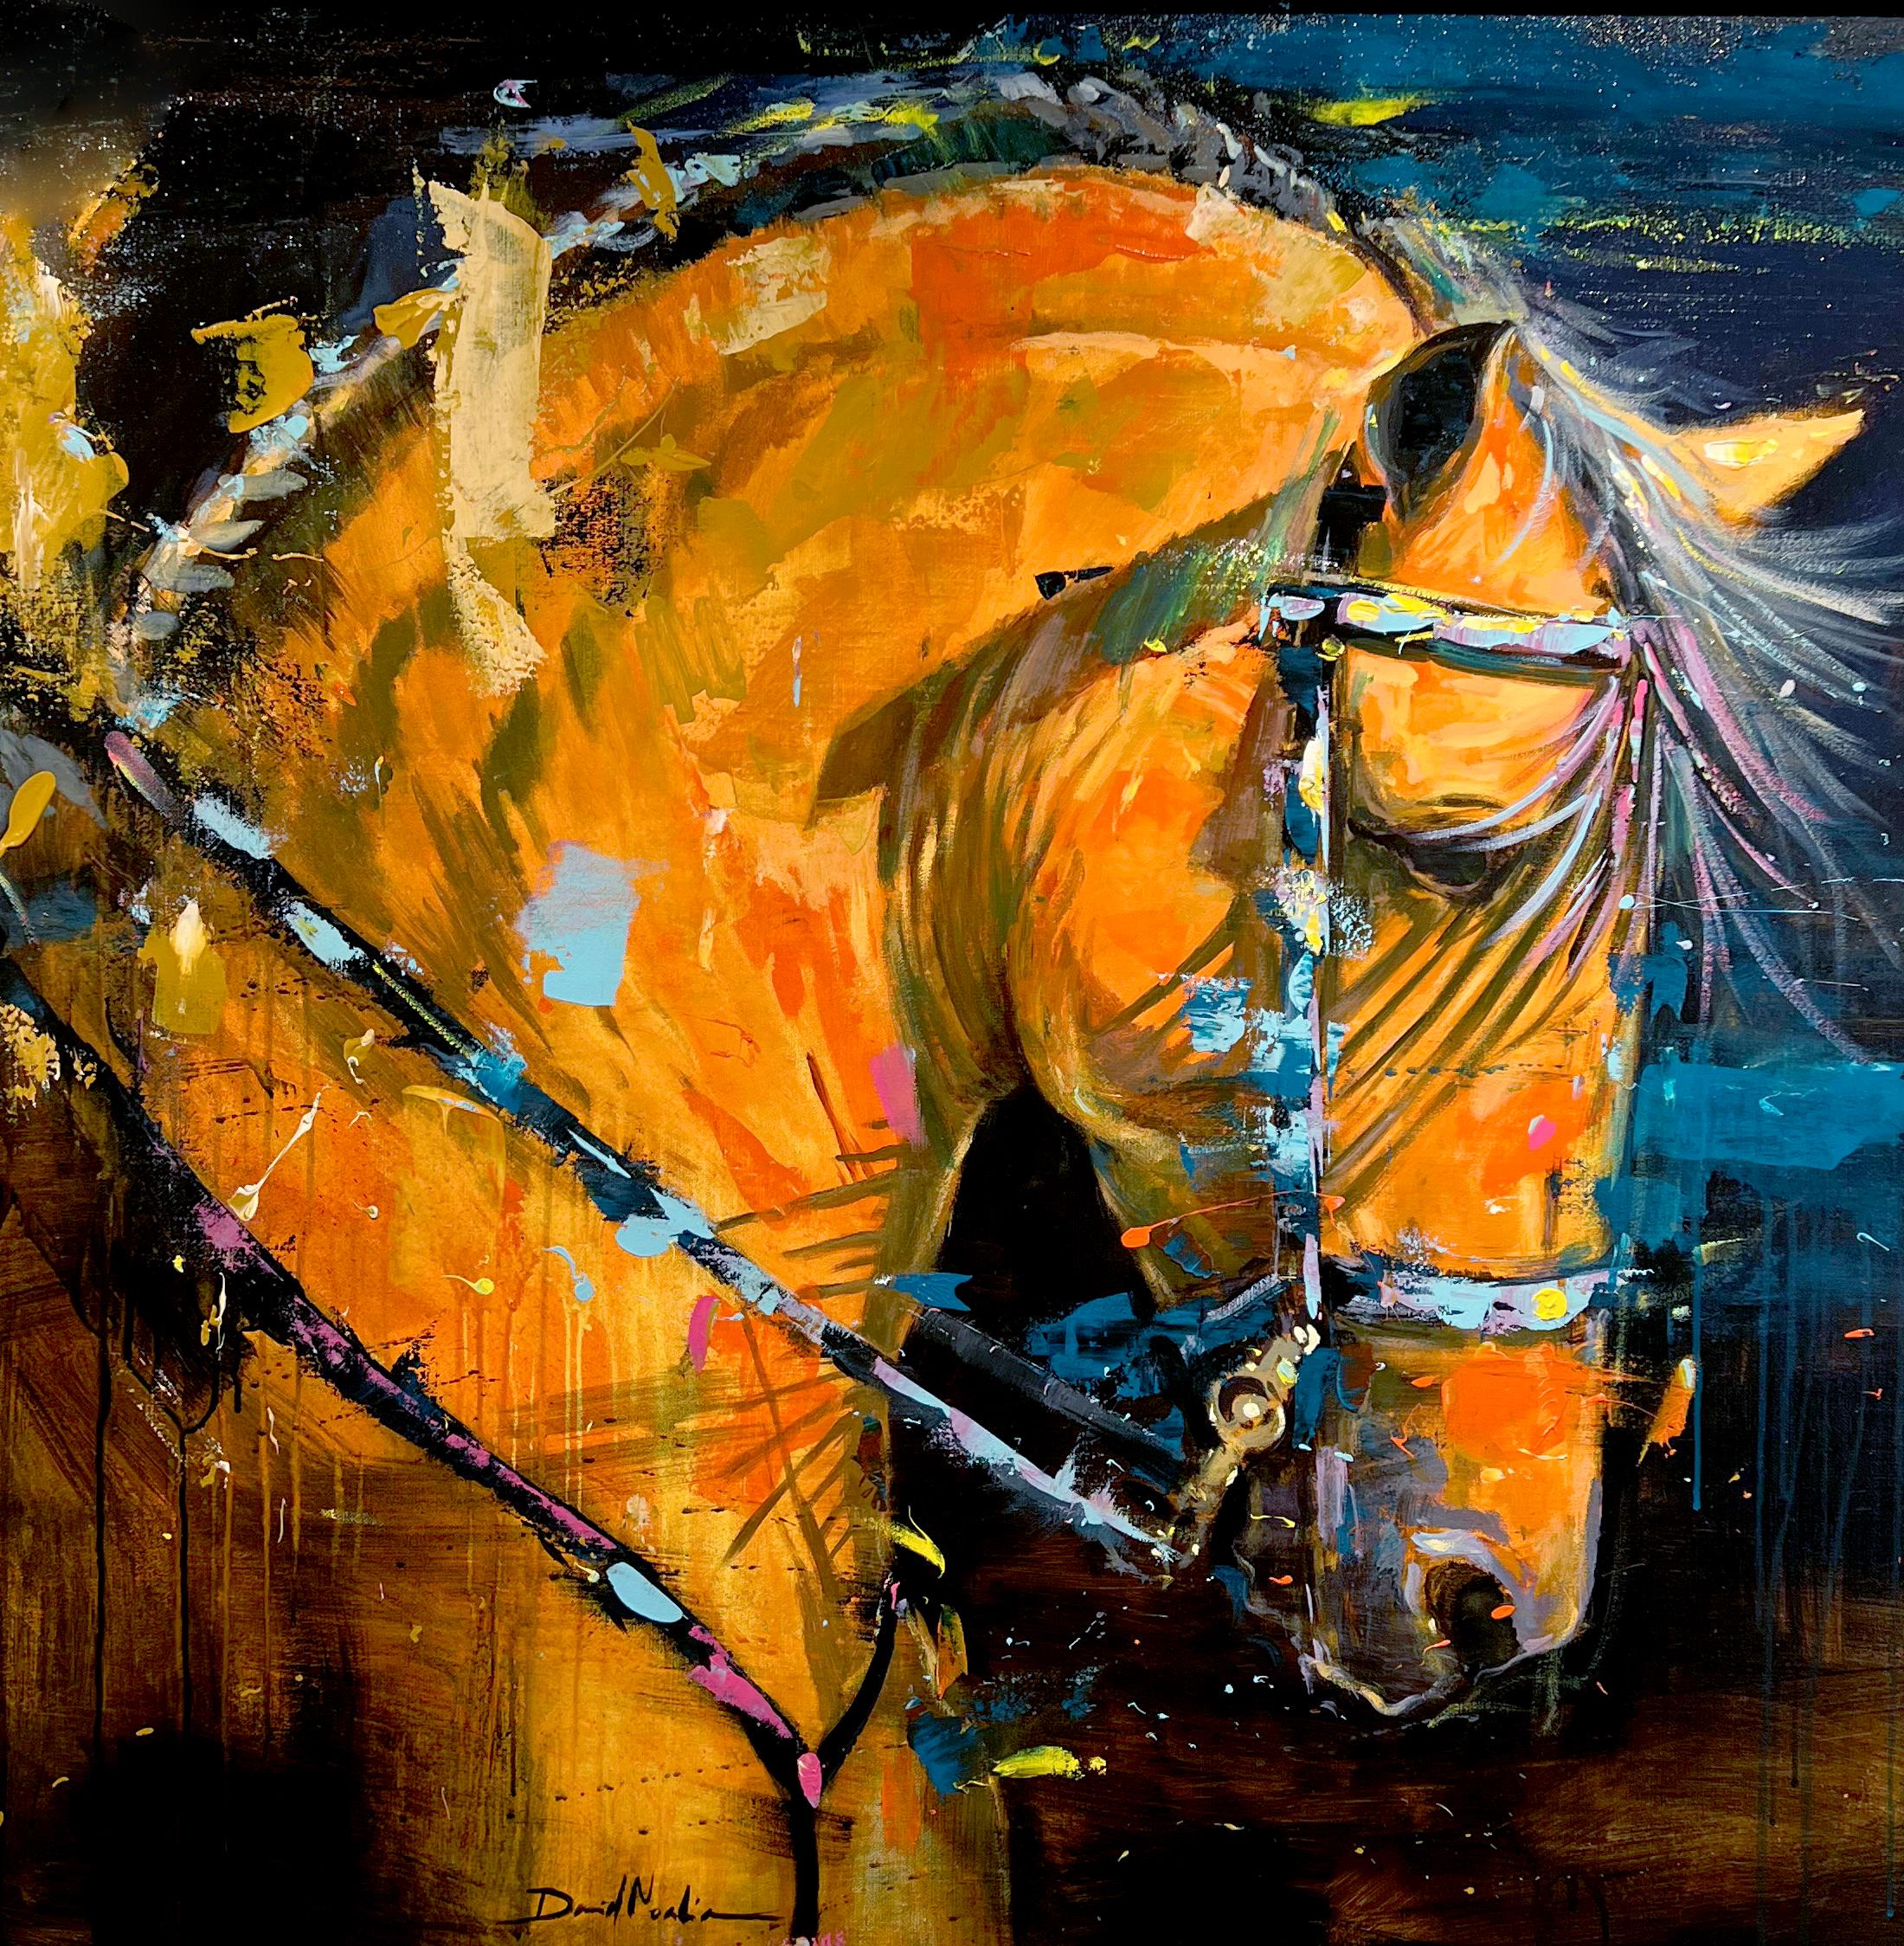 David Noalia, "Moreno", 40x40 Brown Equine Horse Portrait Oil Painting on Canvas